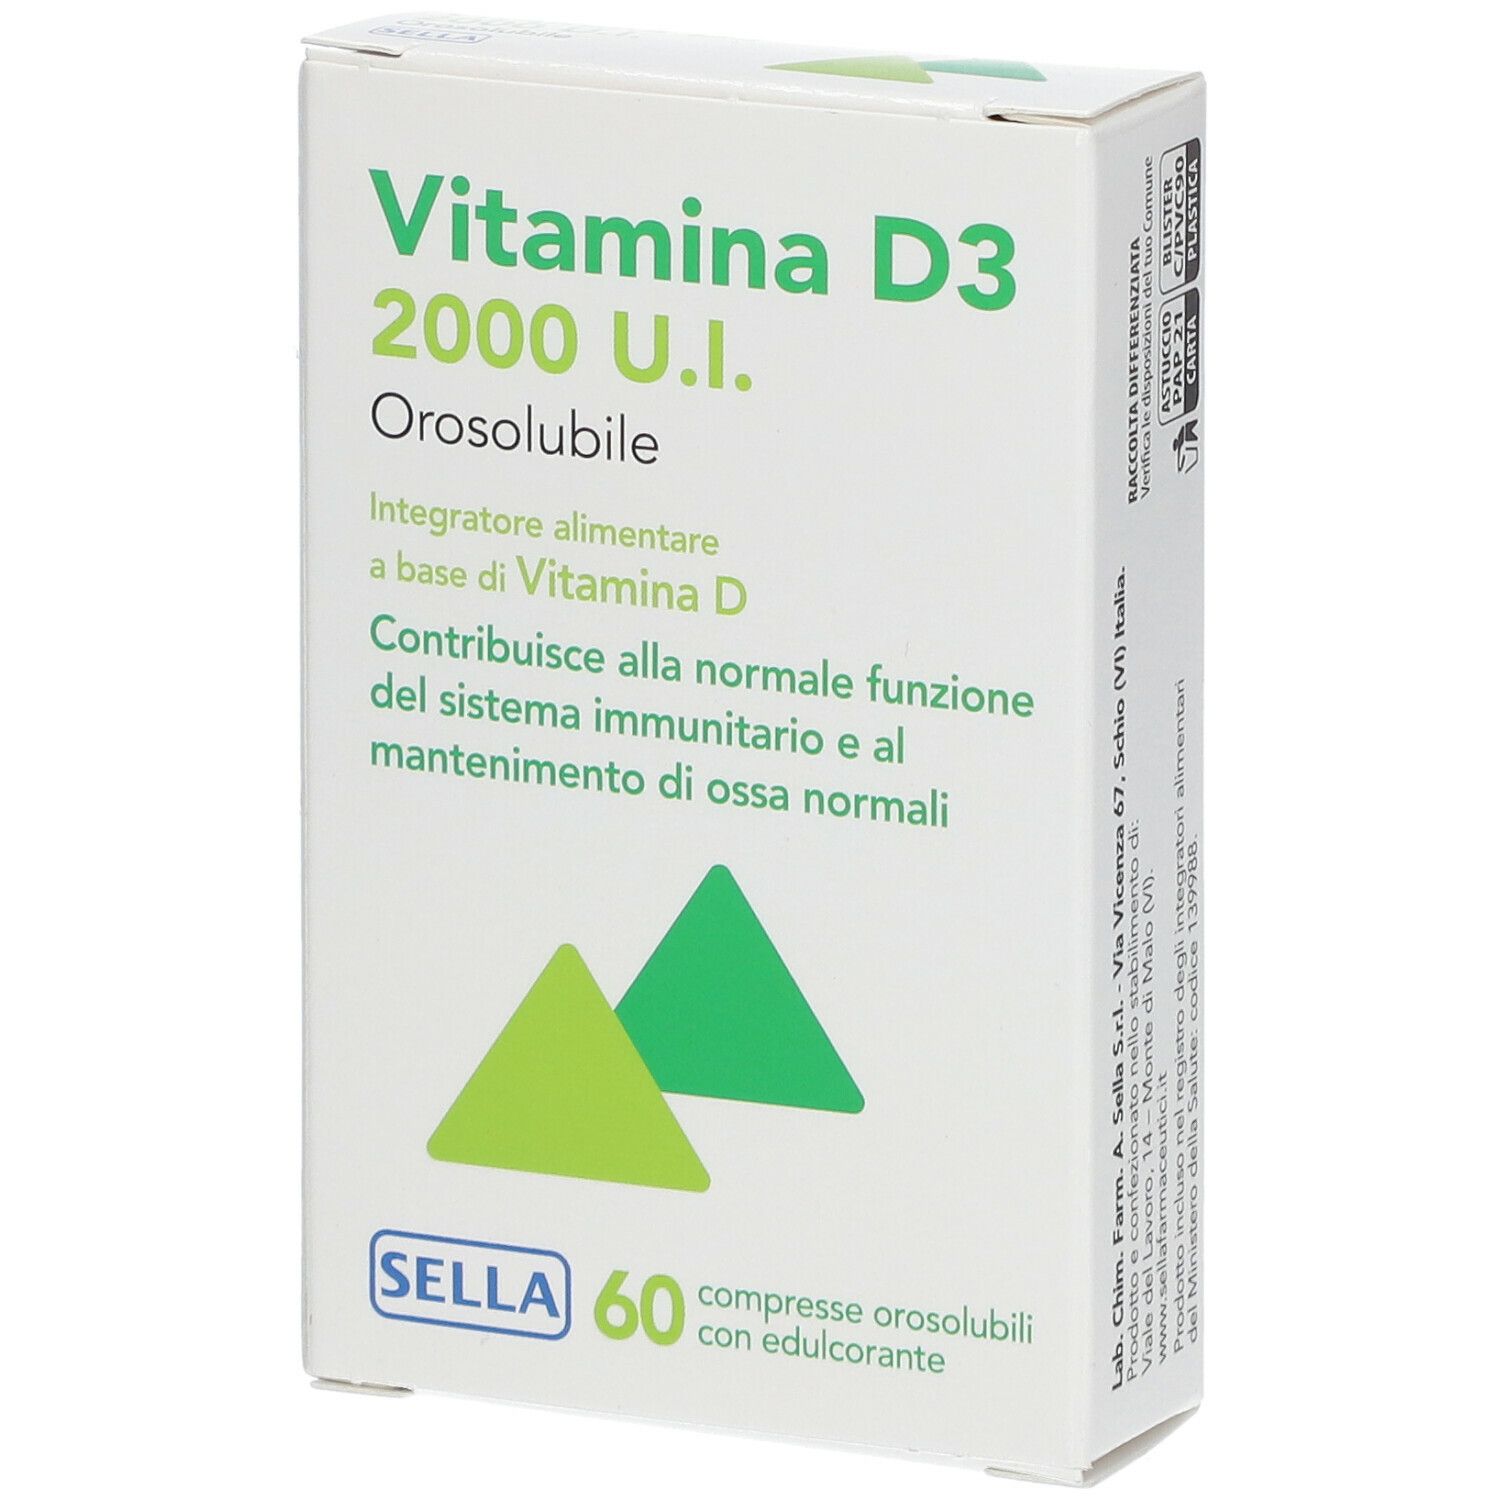 SELLA Vitamina D3 2000 U.I. Orosolubile